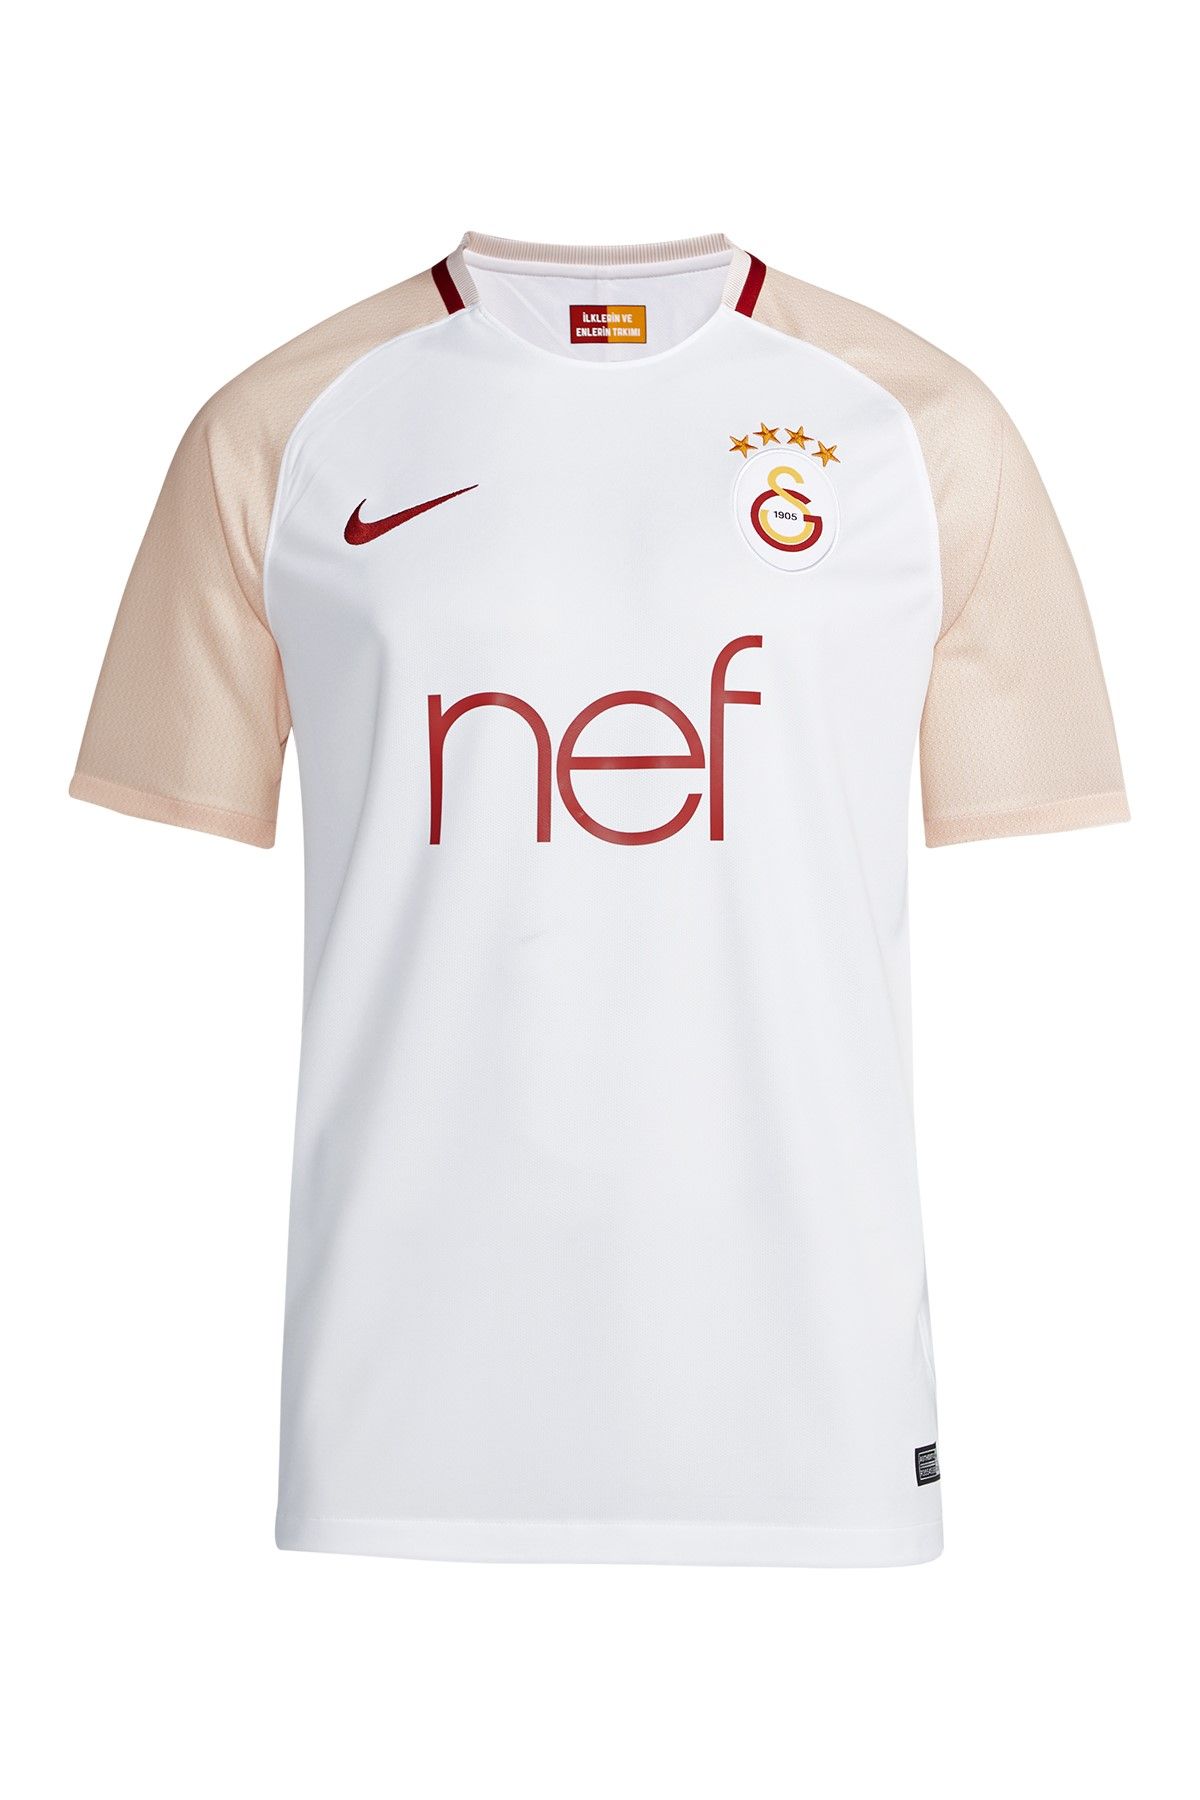 Galatasaray Galatasaray '17-'18 Beyaz (Deplasman) Forma - 847278-101